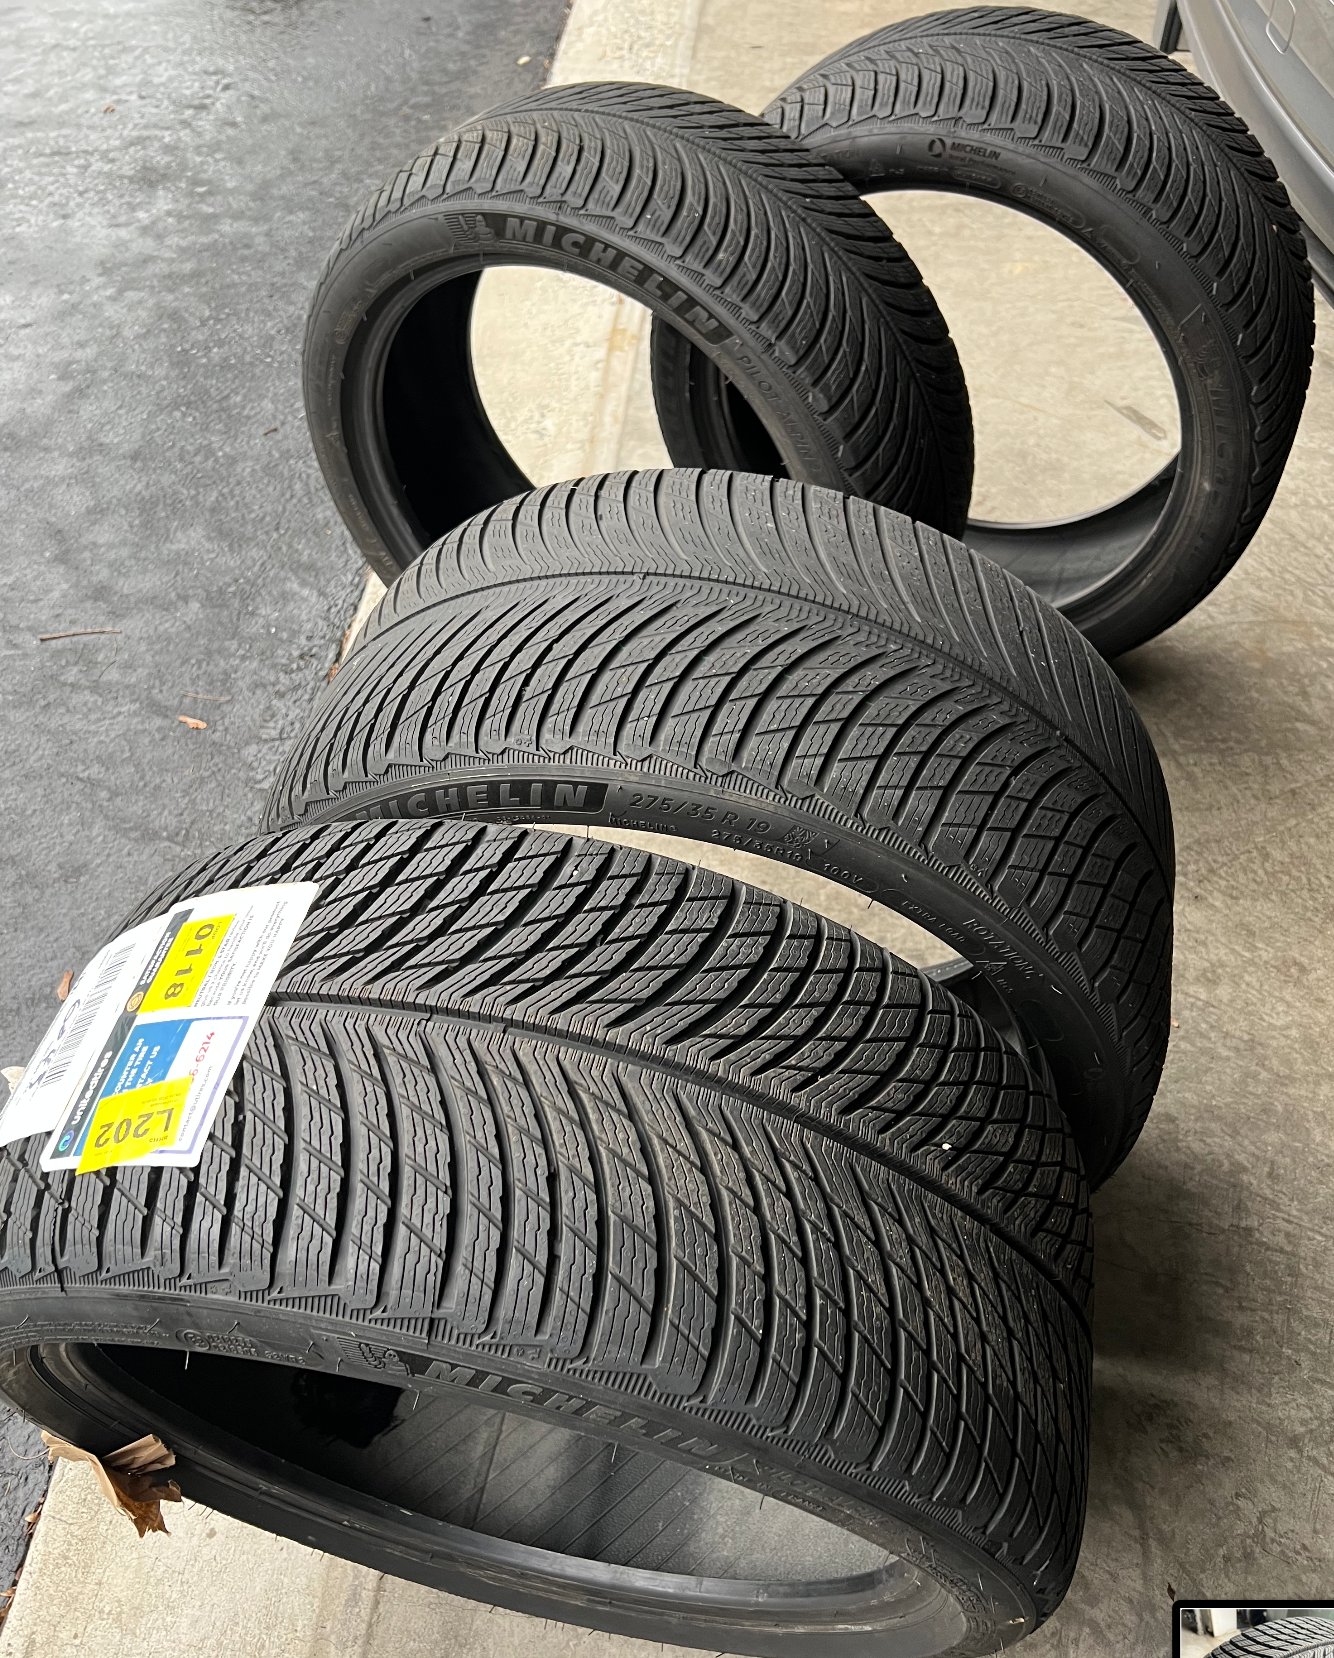 - 245/40/19 Michelin and Forums tires: 5 AudiWorld Pilot 275/35/19 Winter Alpin